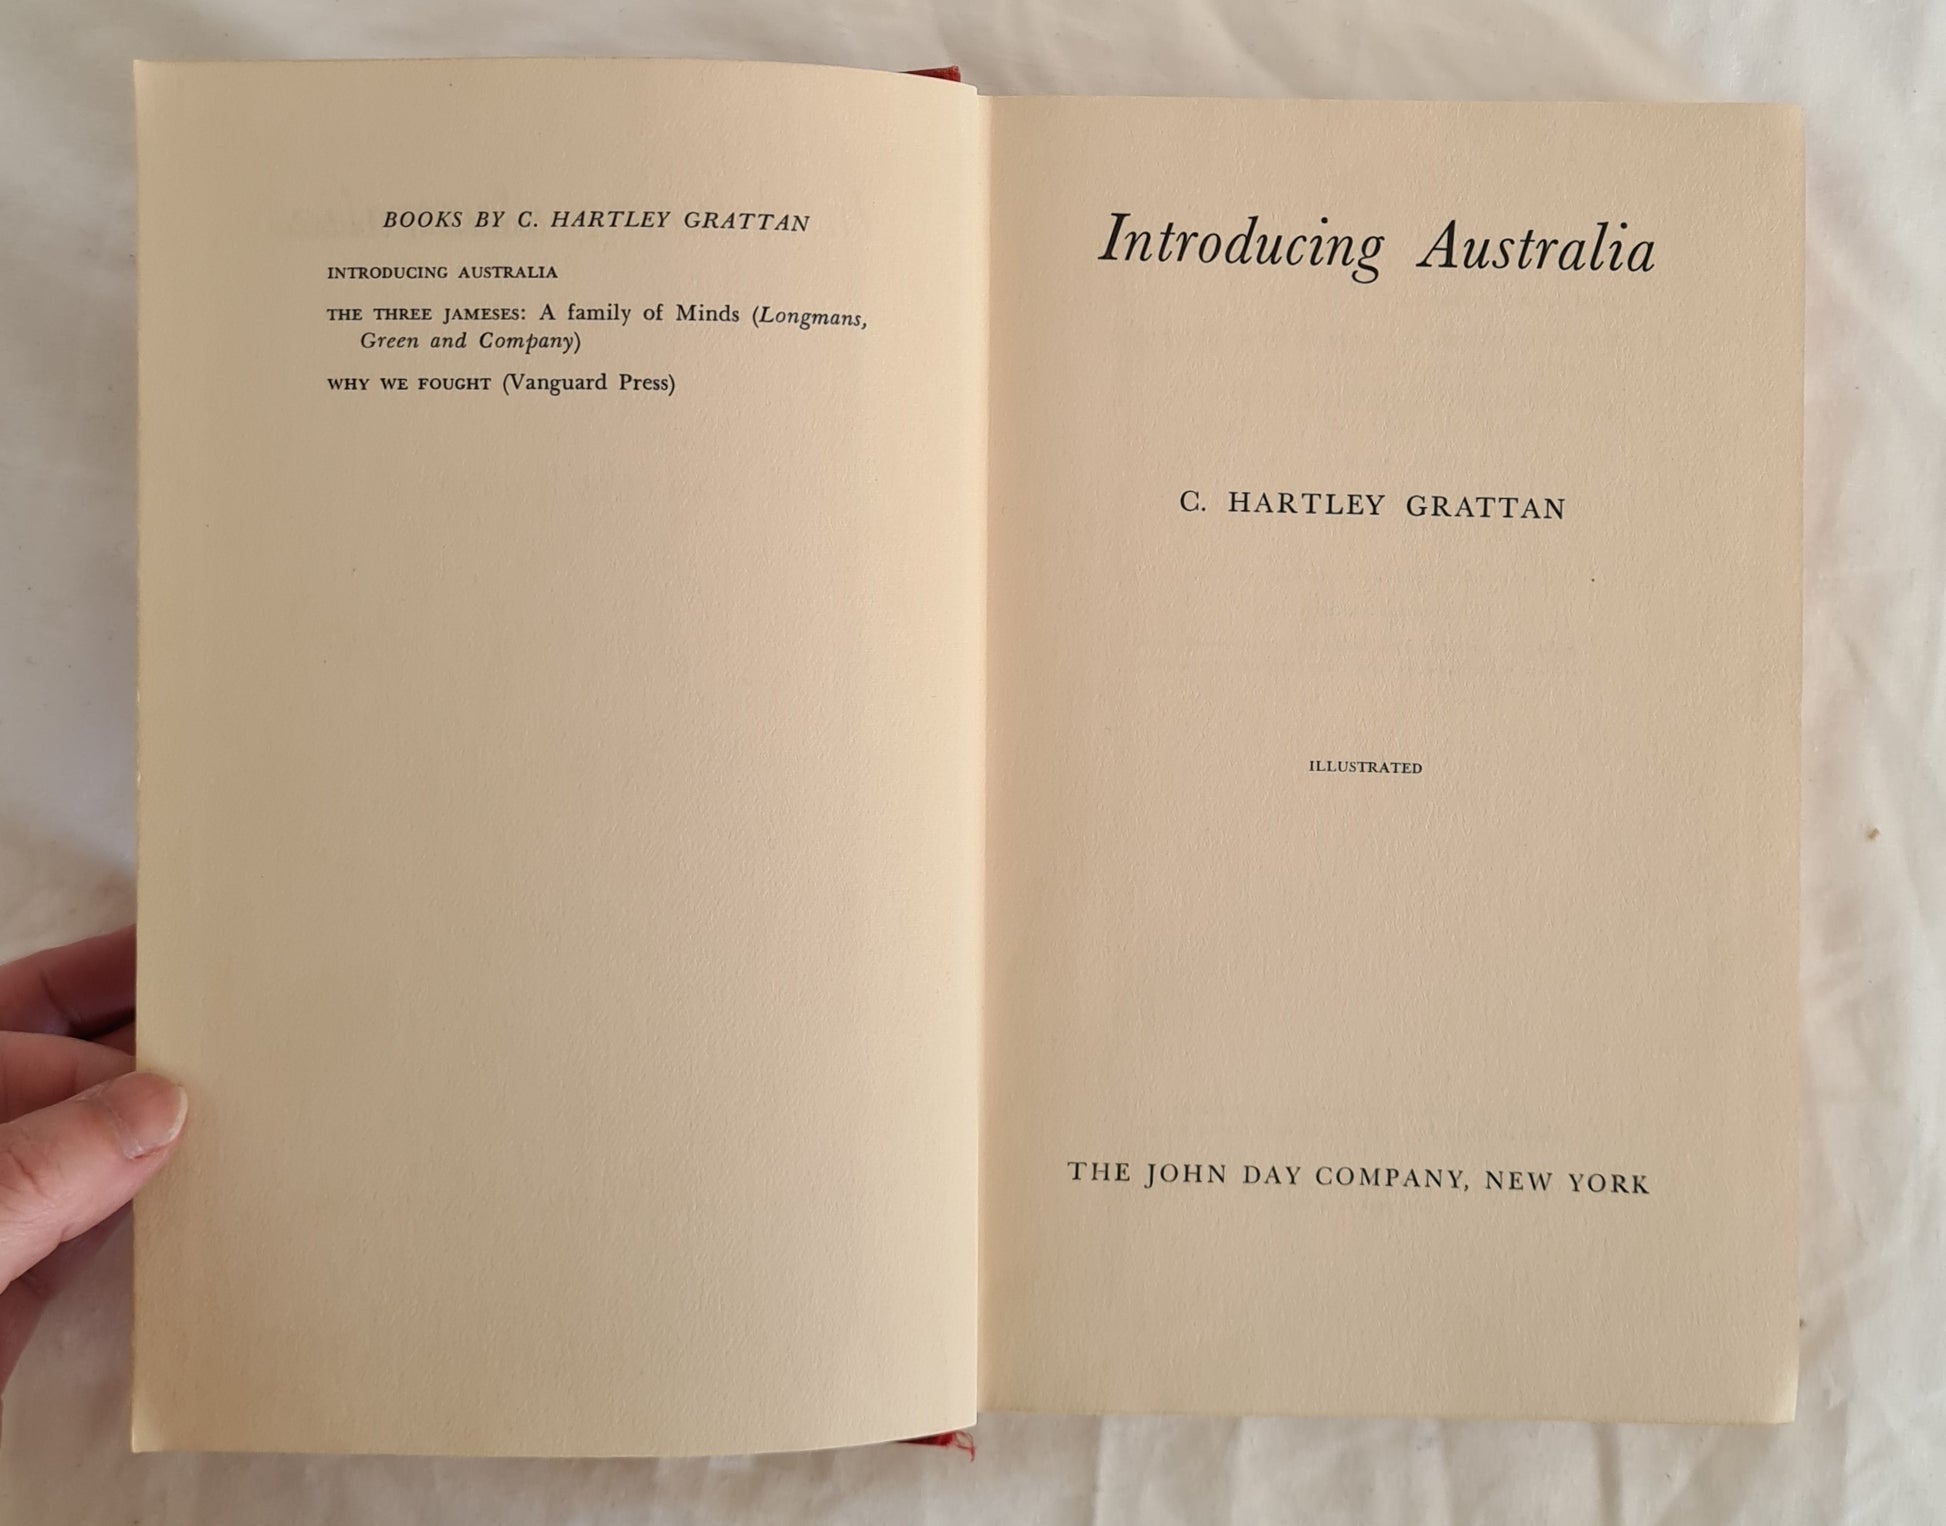 Introducing Australia by C. Hartley Grattan